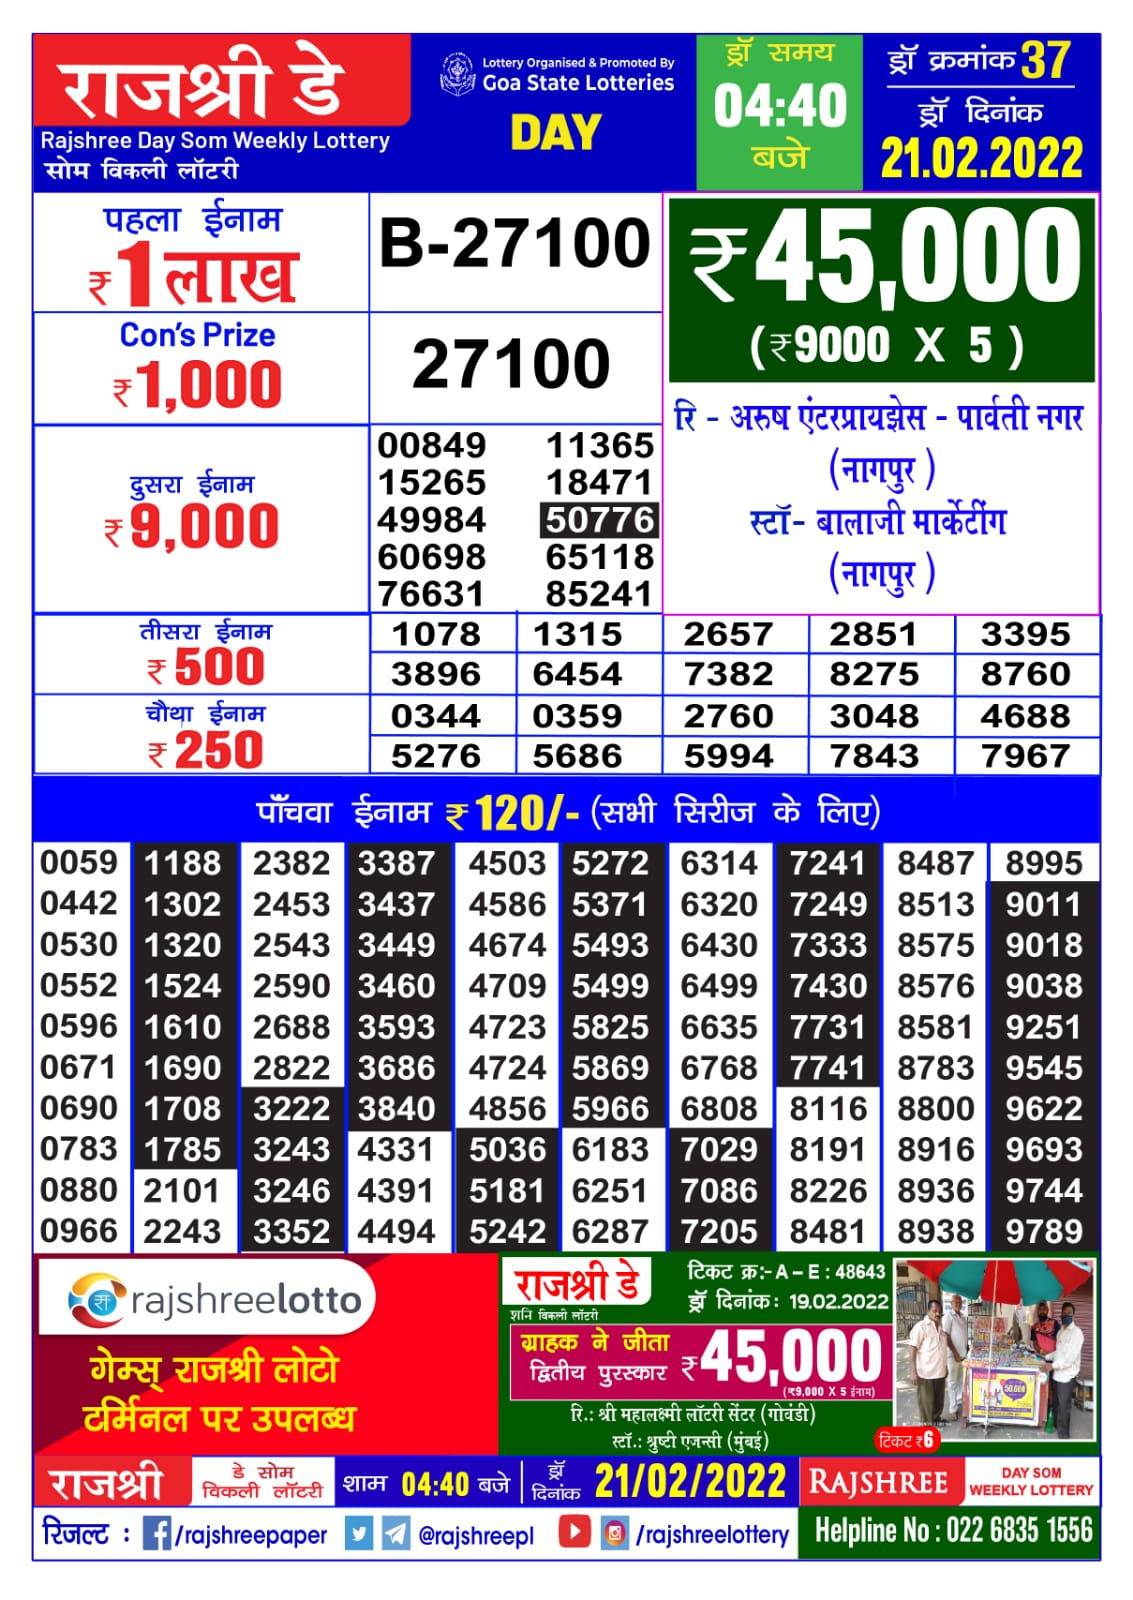 Rajshree Day Som Weekly lottery result 21.02.2022